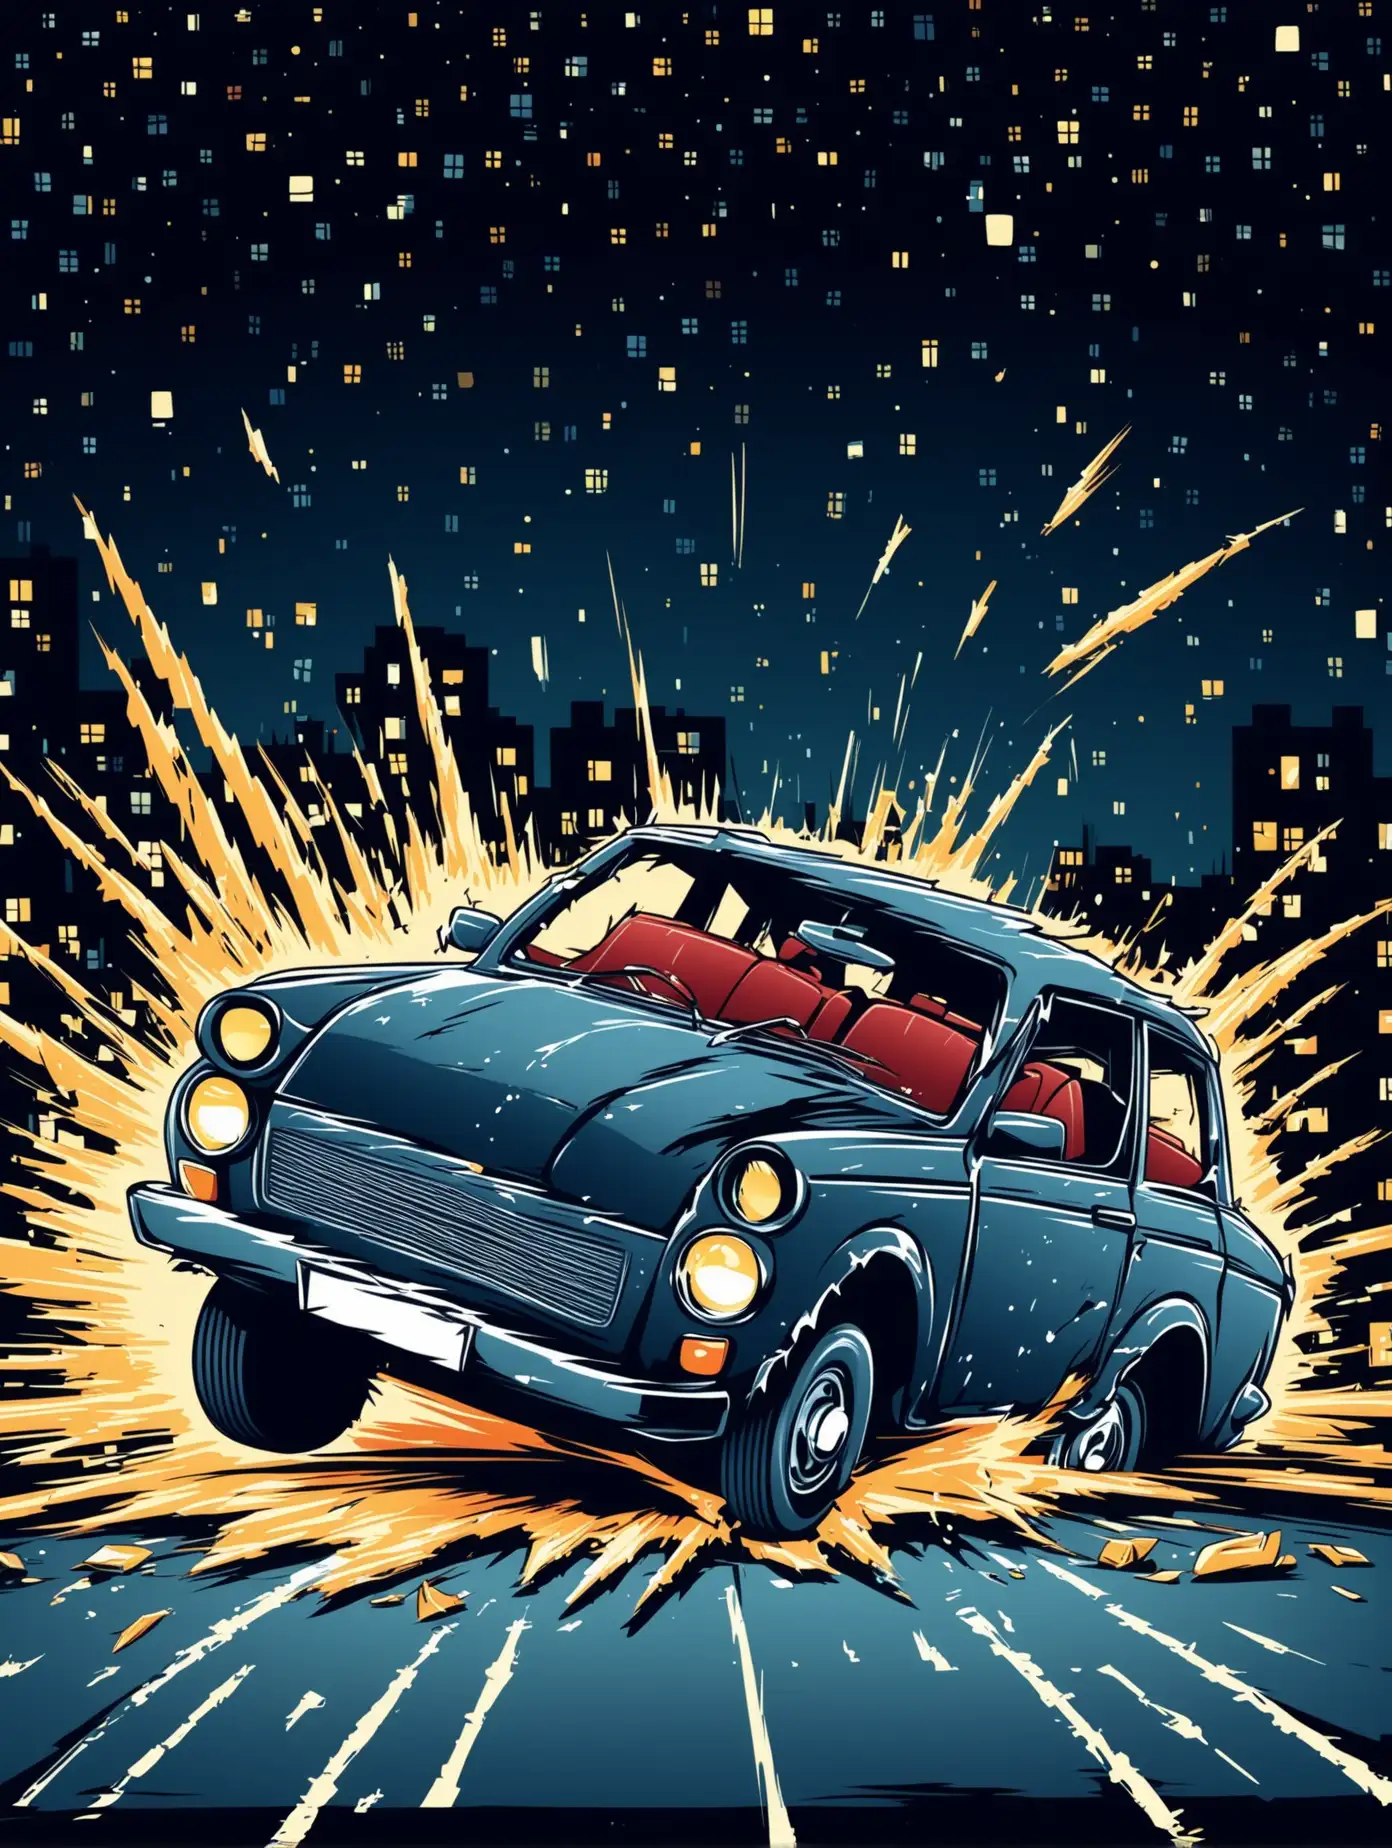 Nighttime Car Crash Illustration with Dramatic Lighting and Motion Blur